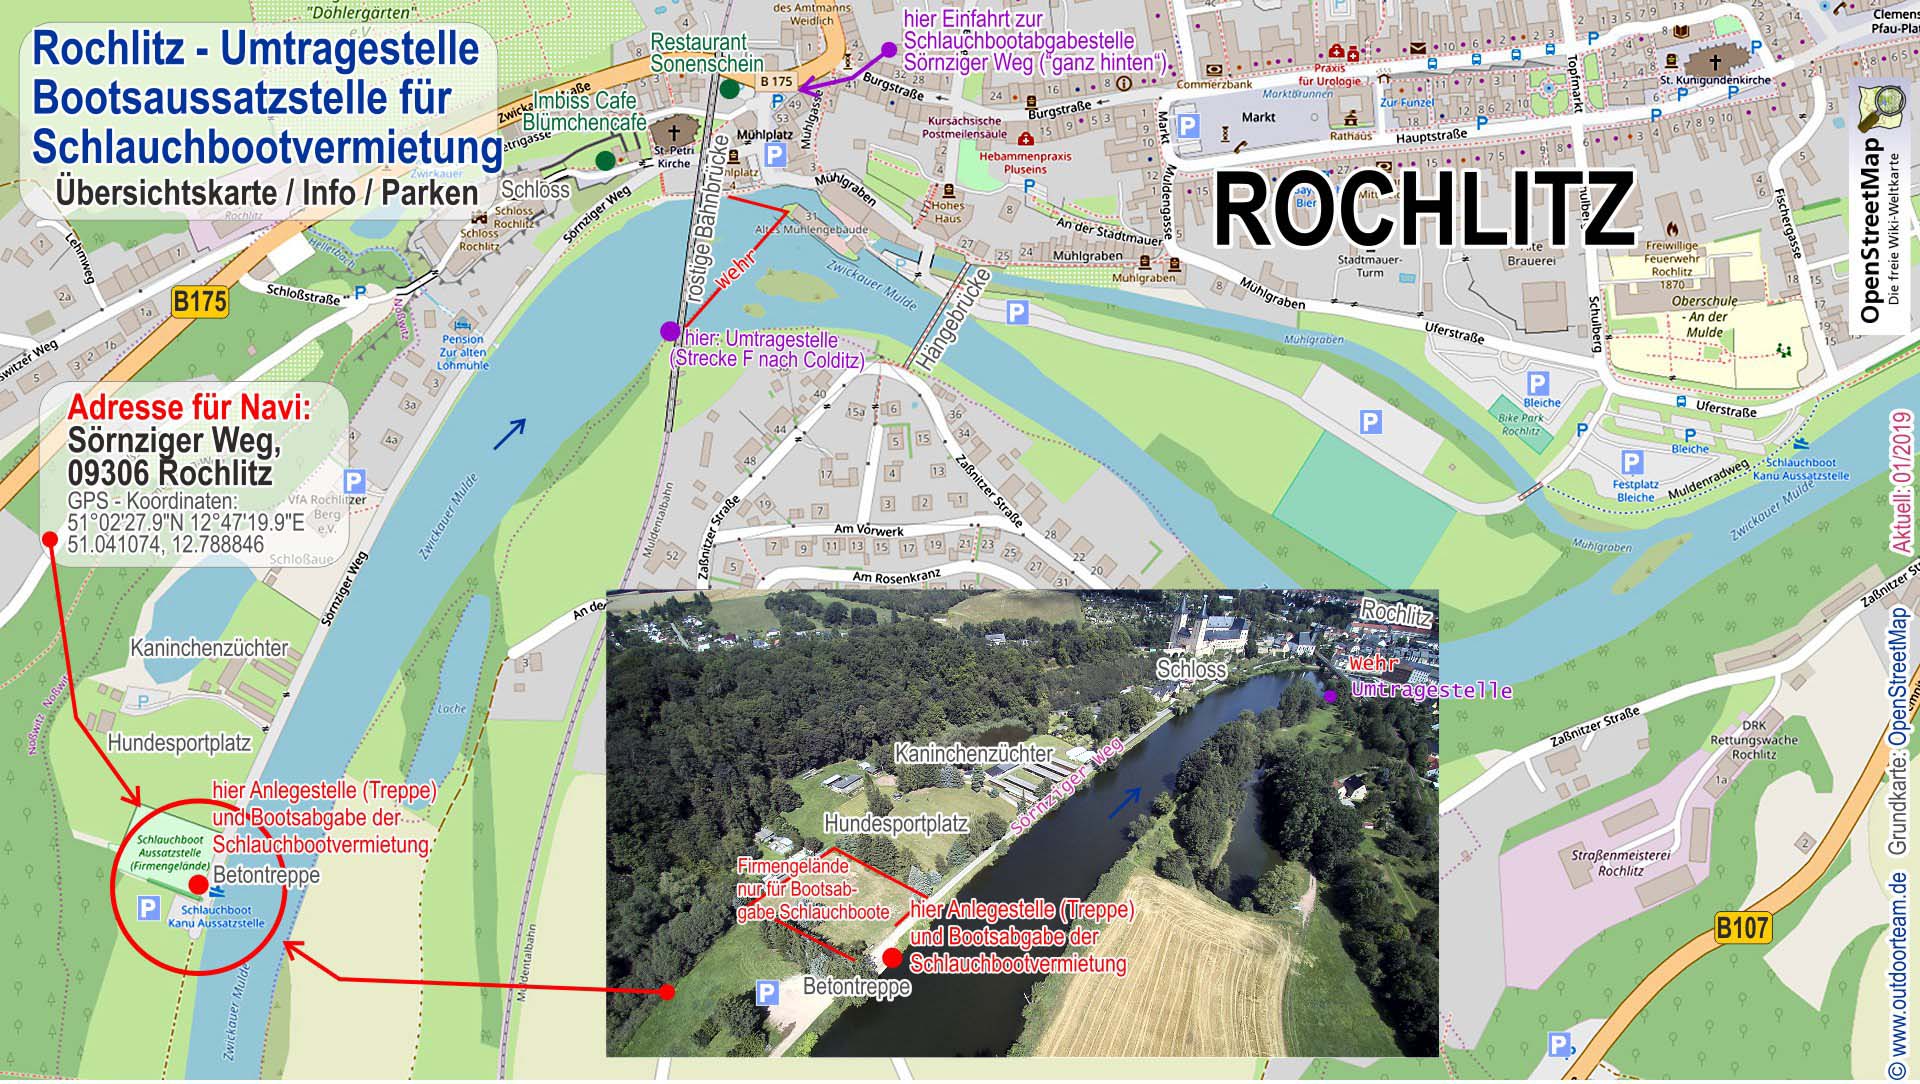 Schlauchbootvermietung Detailkarte Stadt Rochlitz Umtragestelle 1 am Fluss Zwickauer Mulde